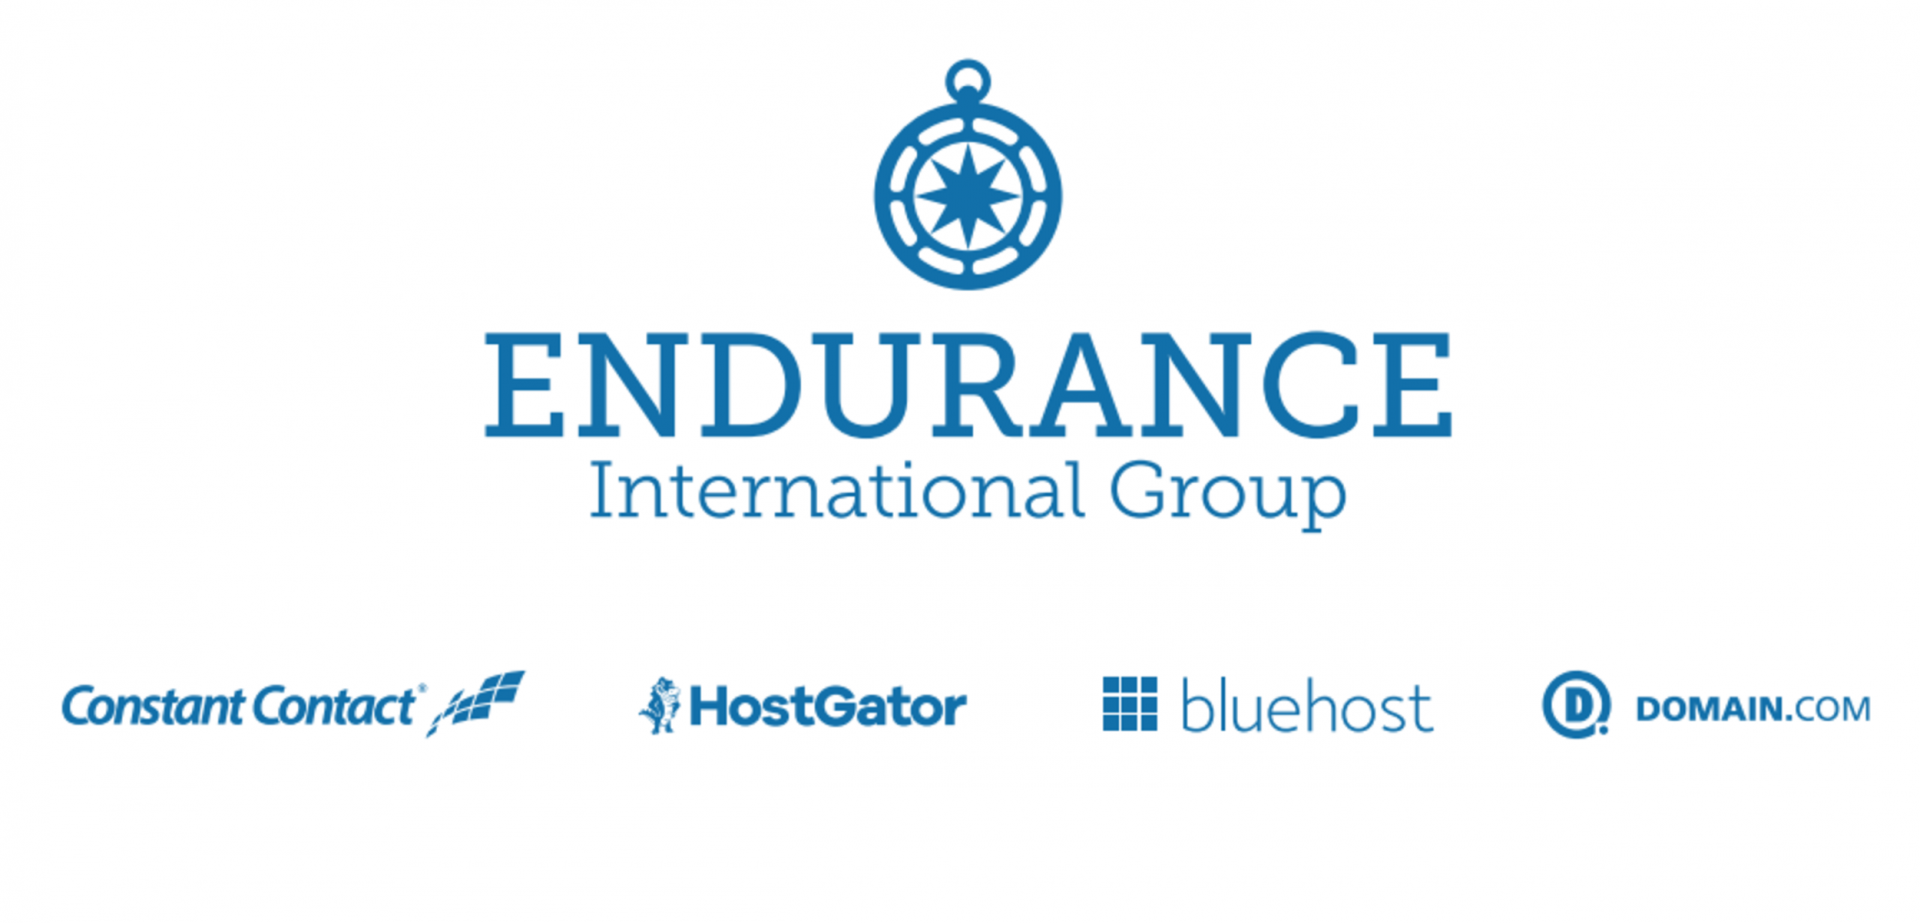 Endurance фирма. Балтик Гроуп Интернешнл. Beaulieu International Group логотип. Fletcher Group holdings логотип.